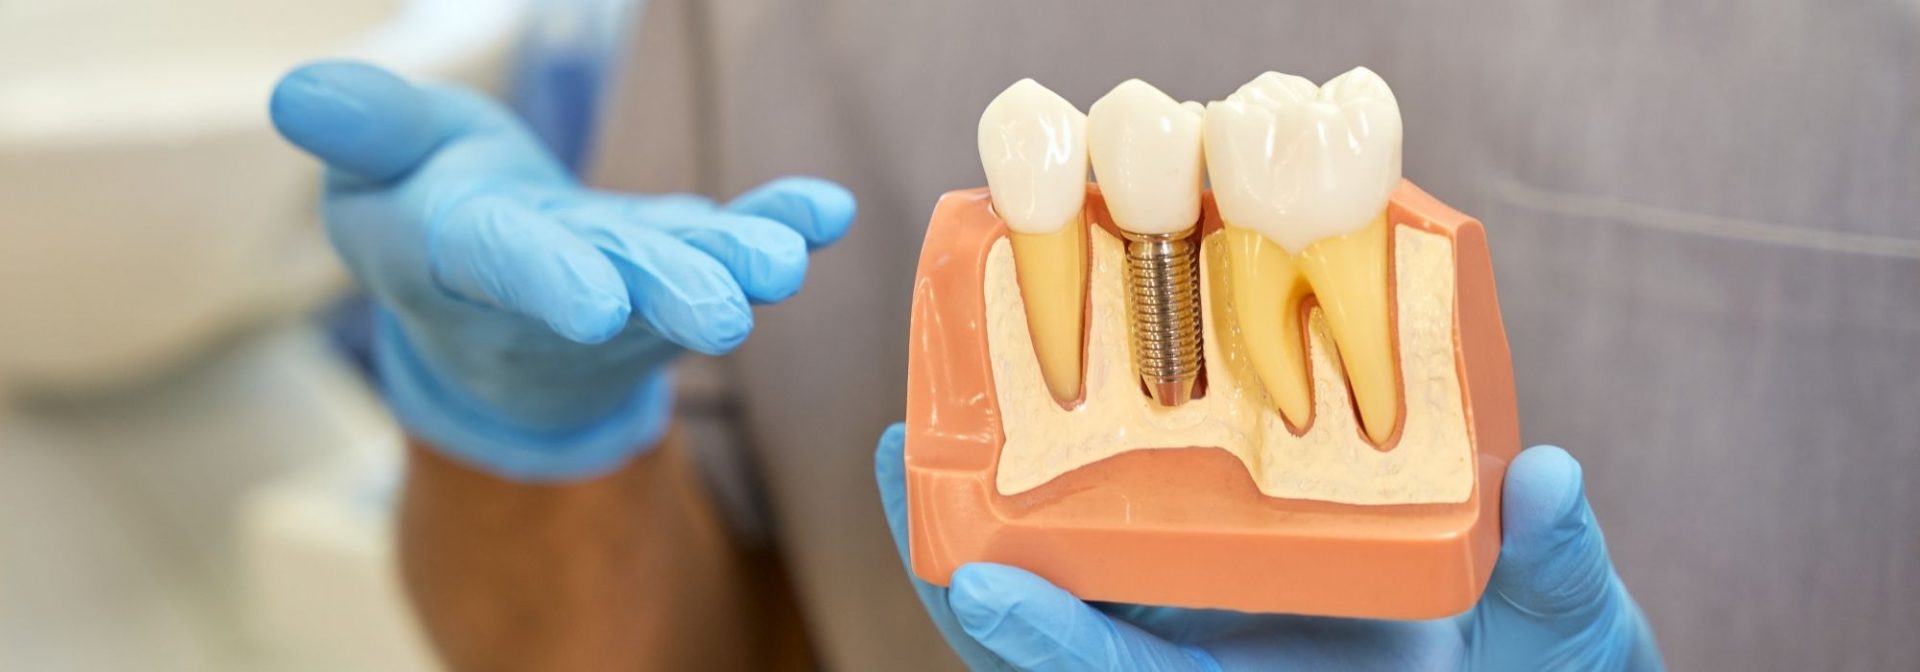 Implante dental en Málaga | Rubal Dental